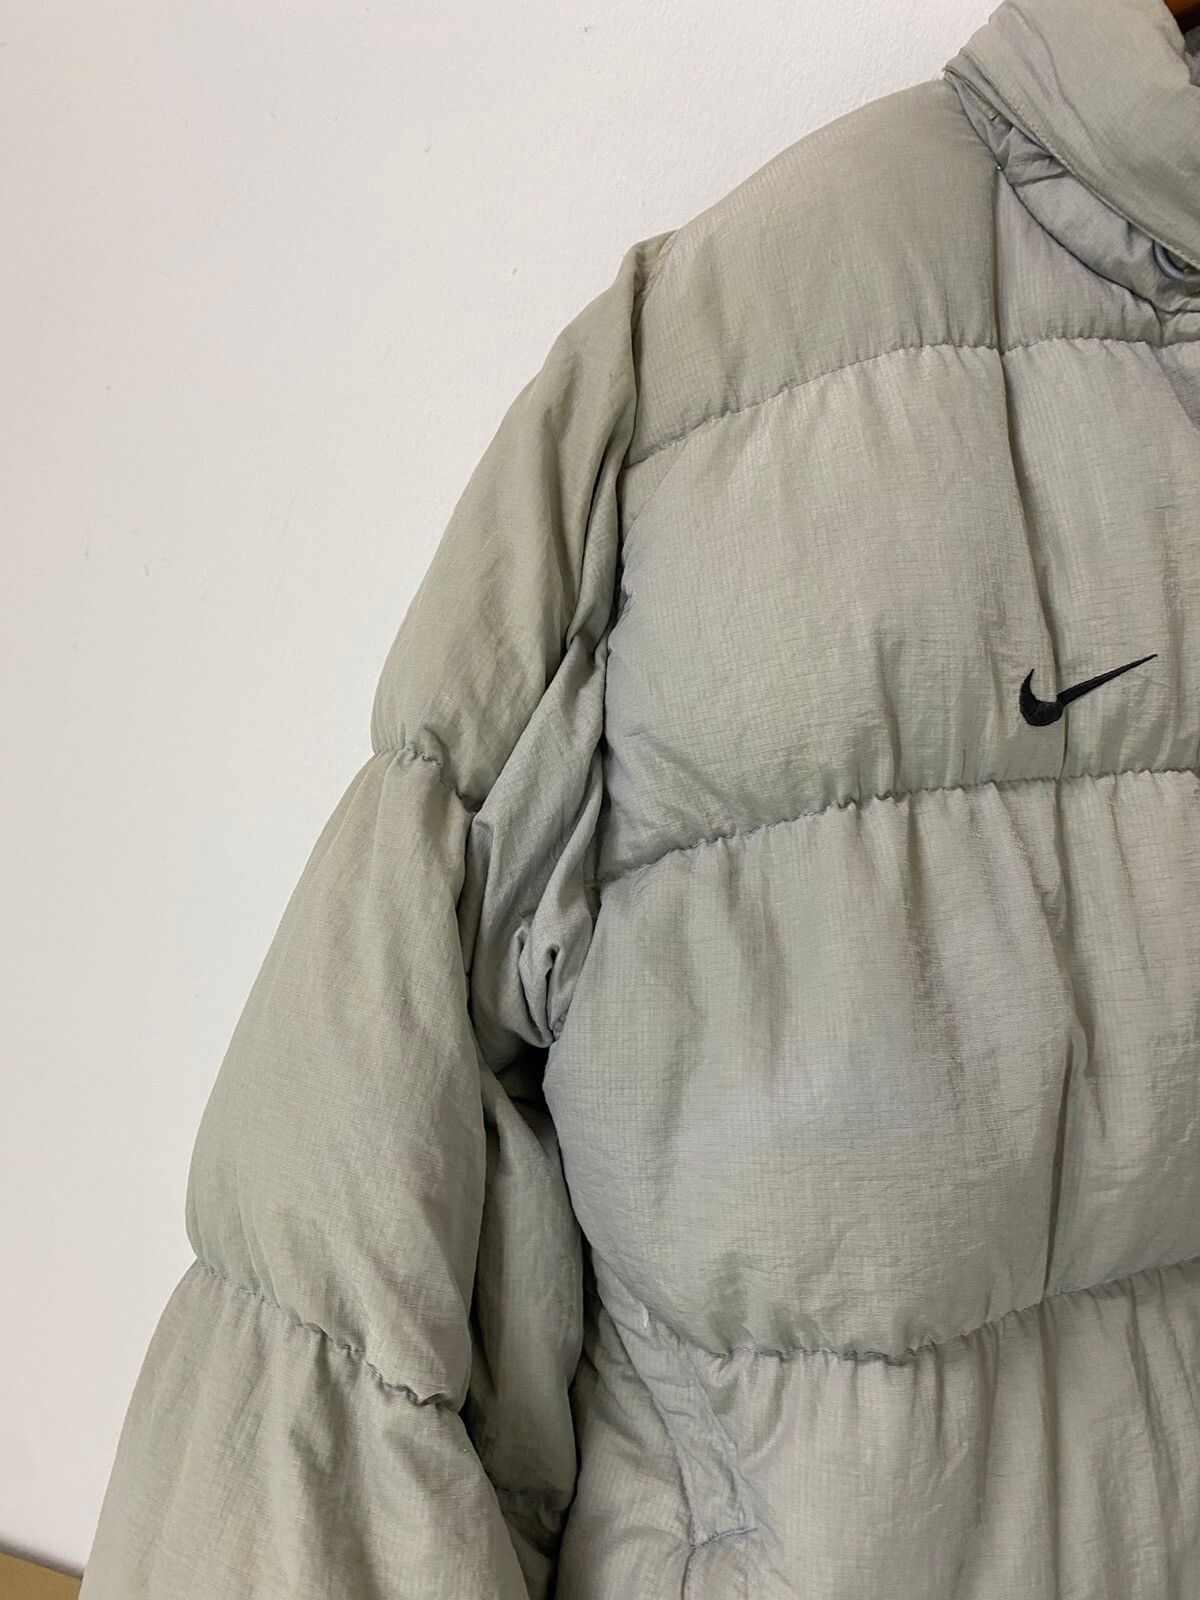 Manchester United Nike Puffer Jacket Design Down Jacket - 5